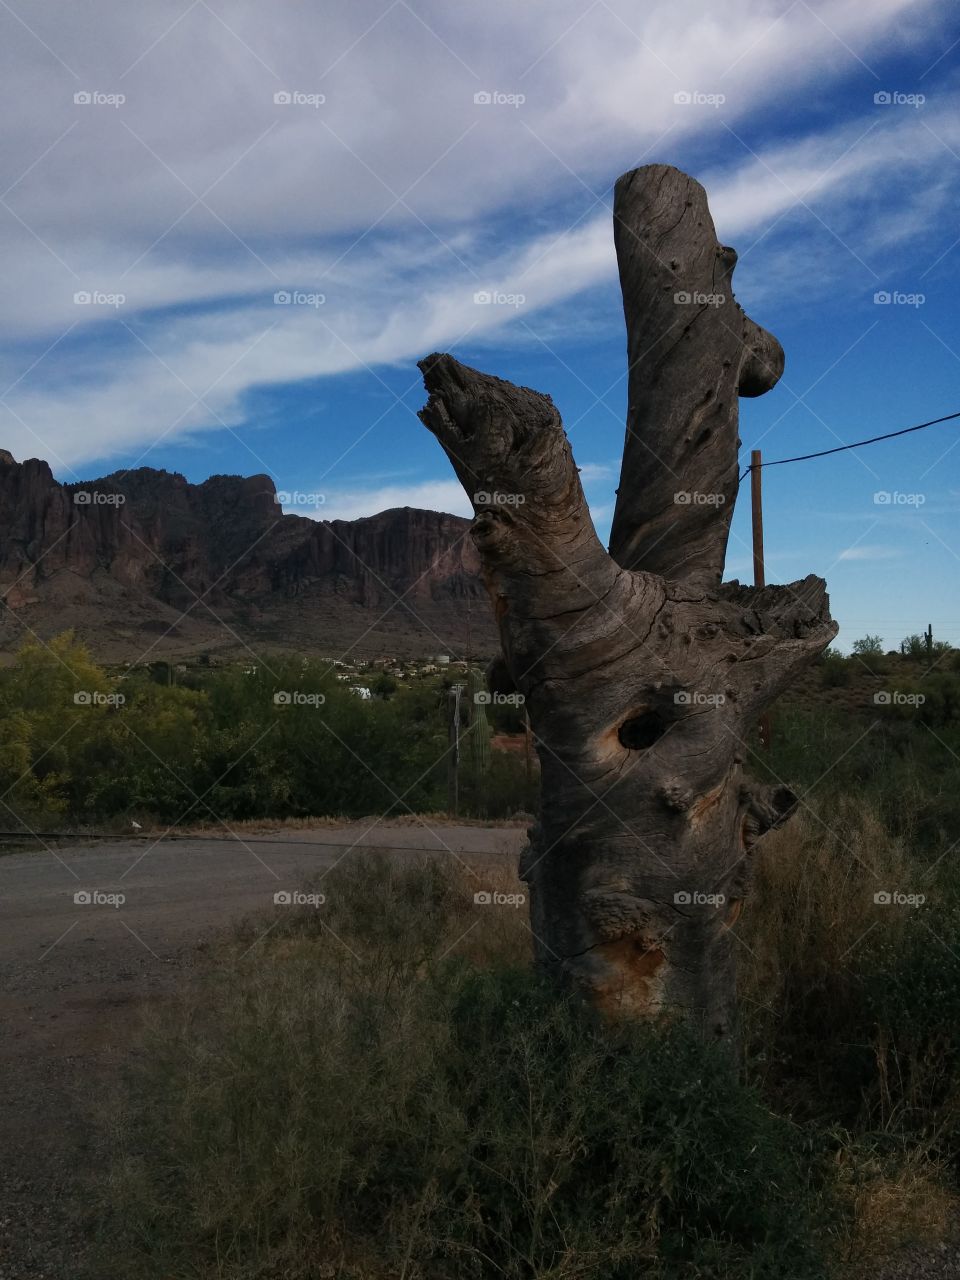 Arizona Ghost Town. Barren town bereft of folk